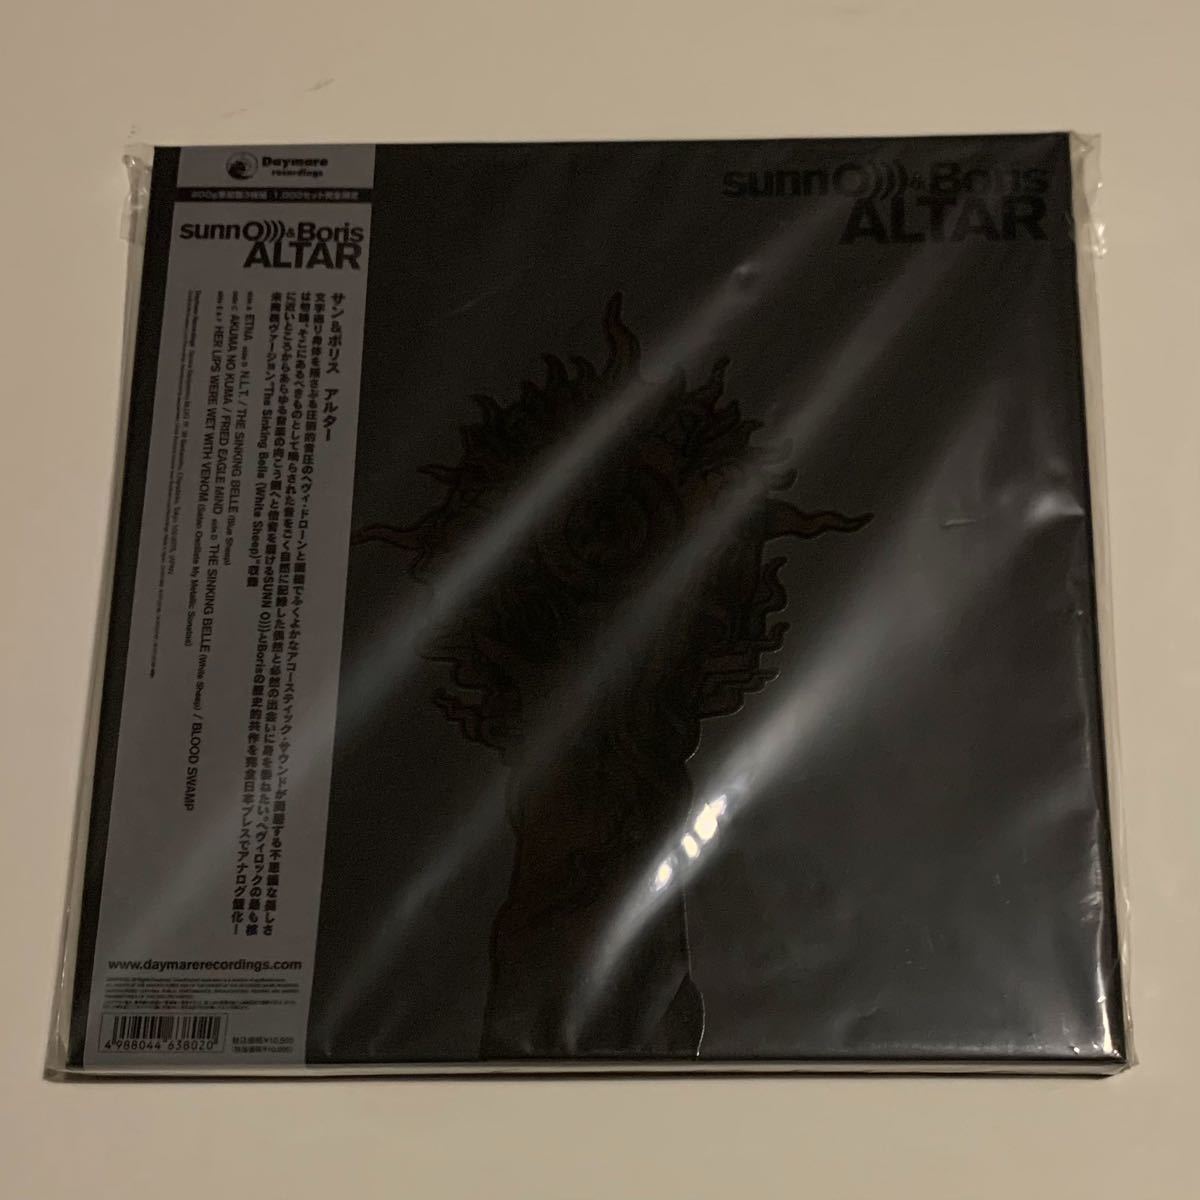 Sunn O))) & Boris Altar 日本盤 Box 限定盤 LP Southern Lord Drone Doom Metal Experimental Ambient アナログ ドゥーム メタルの画像7